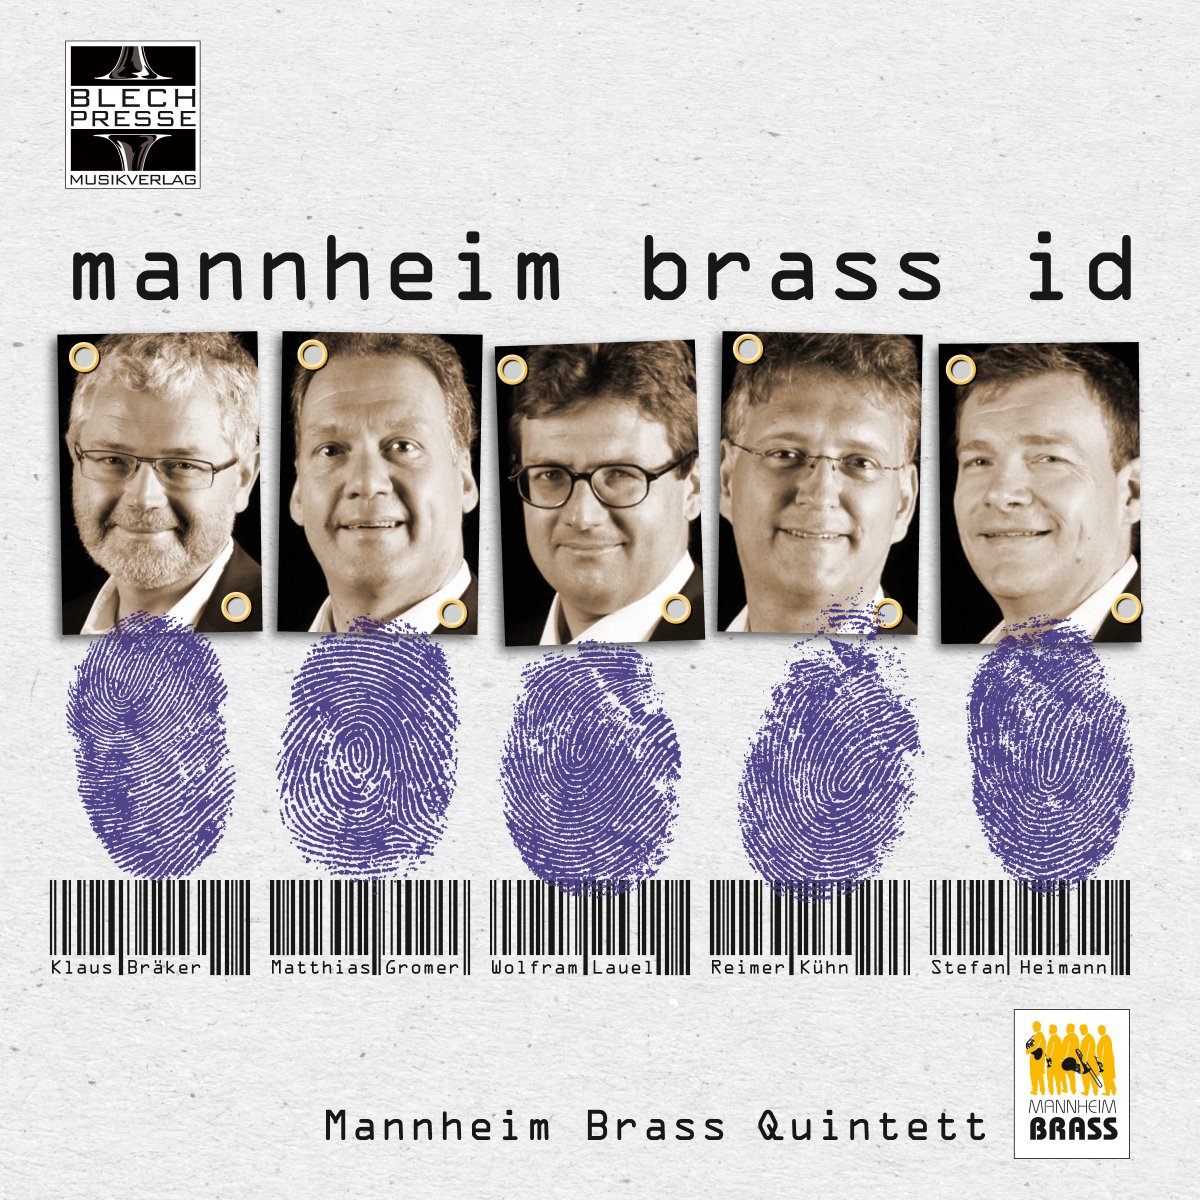 Mannheim Brass ID - click here